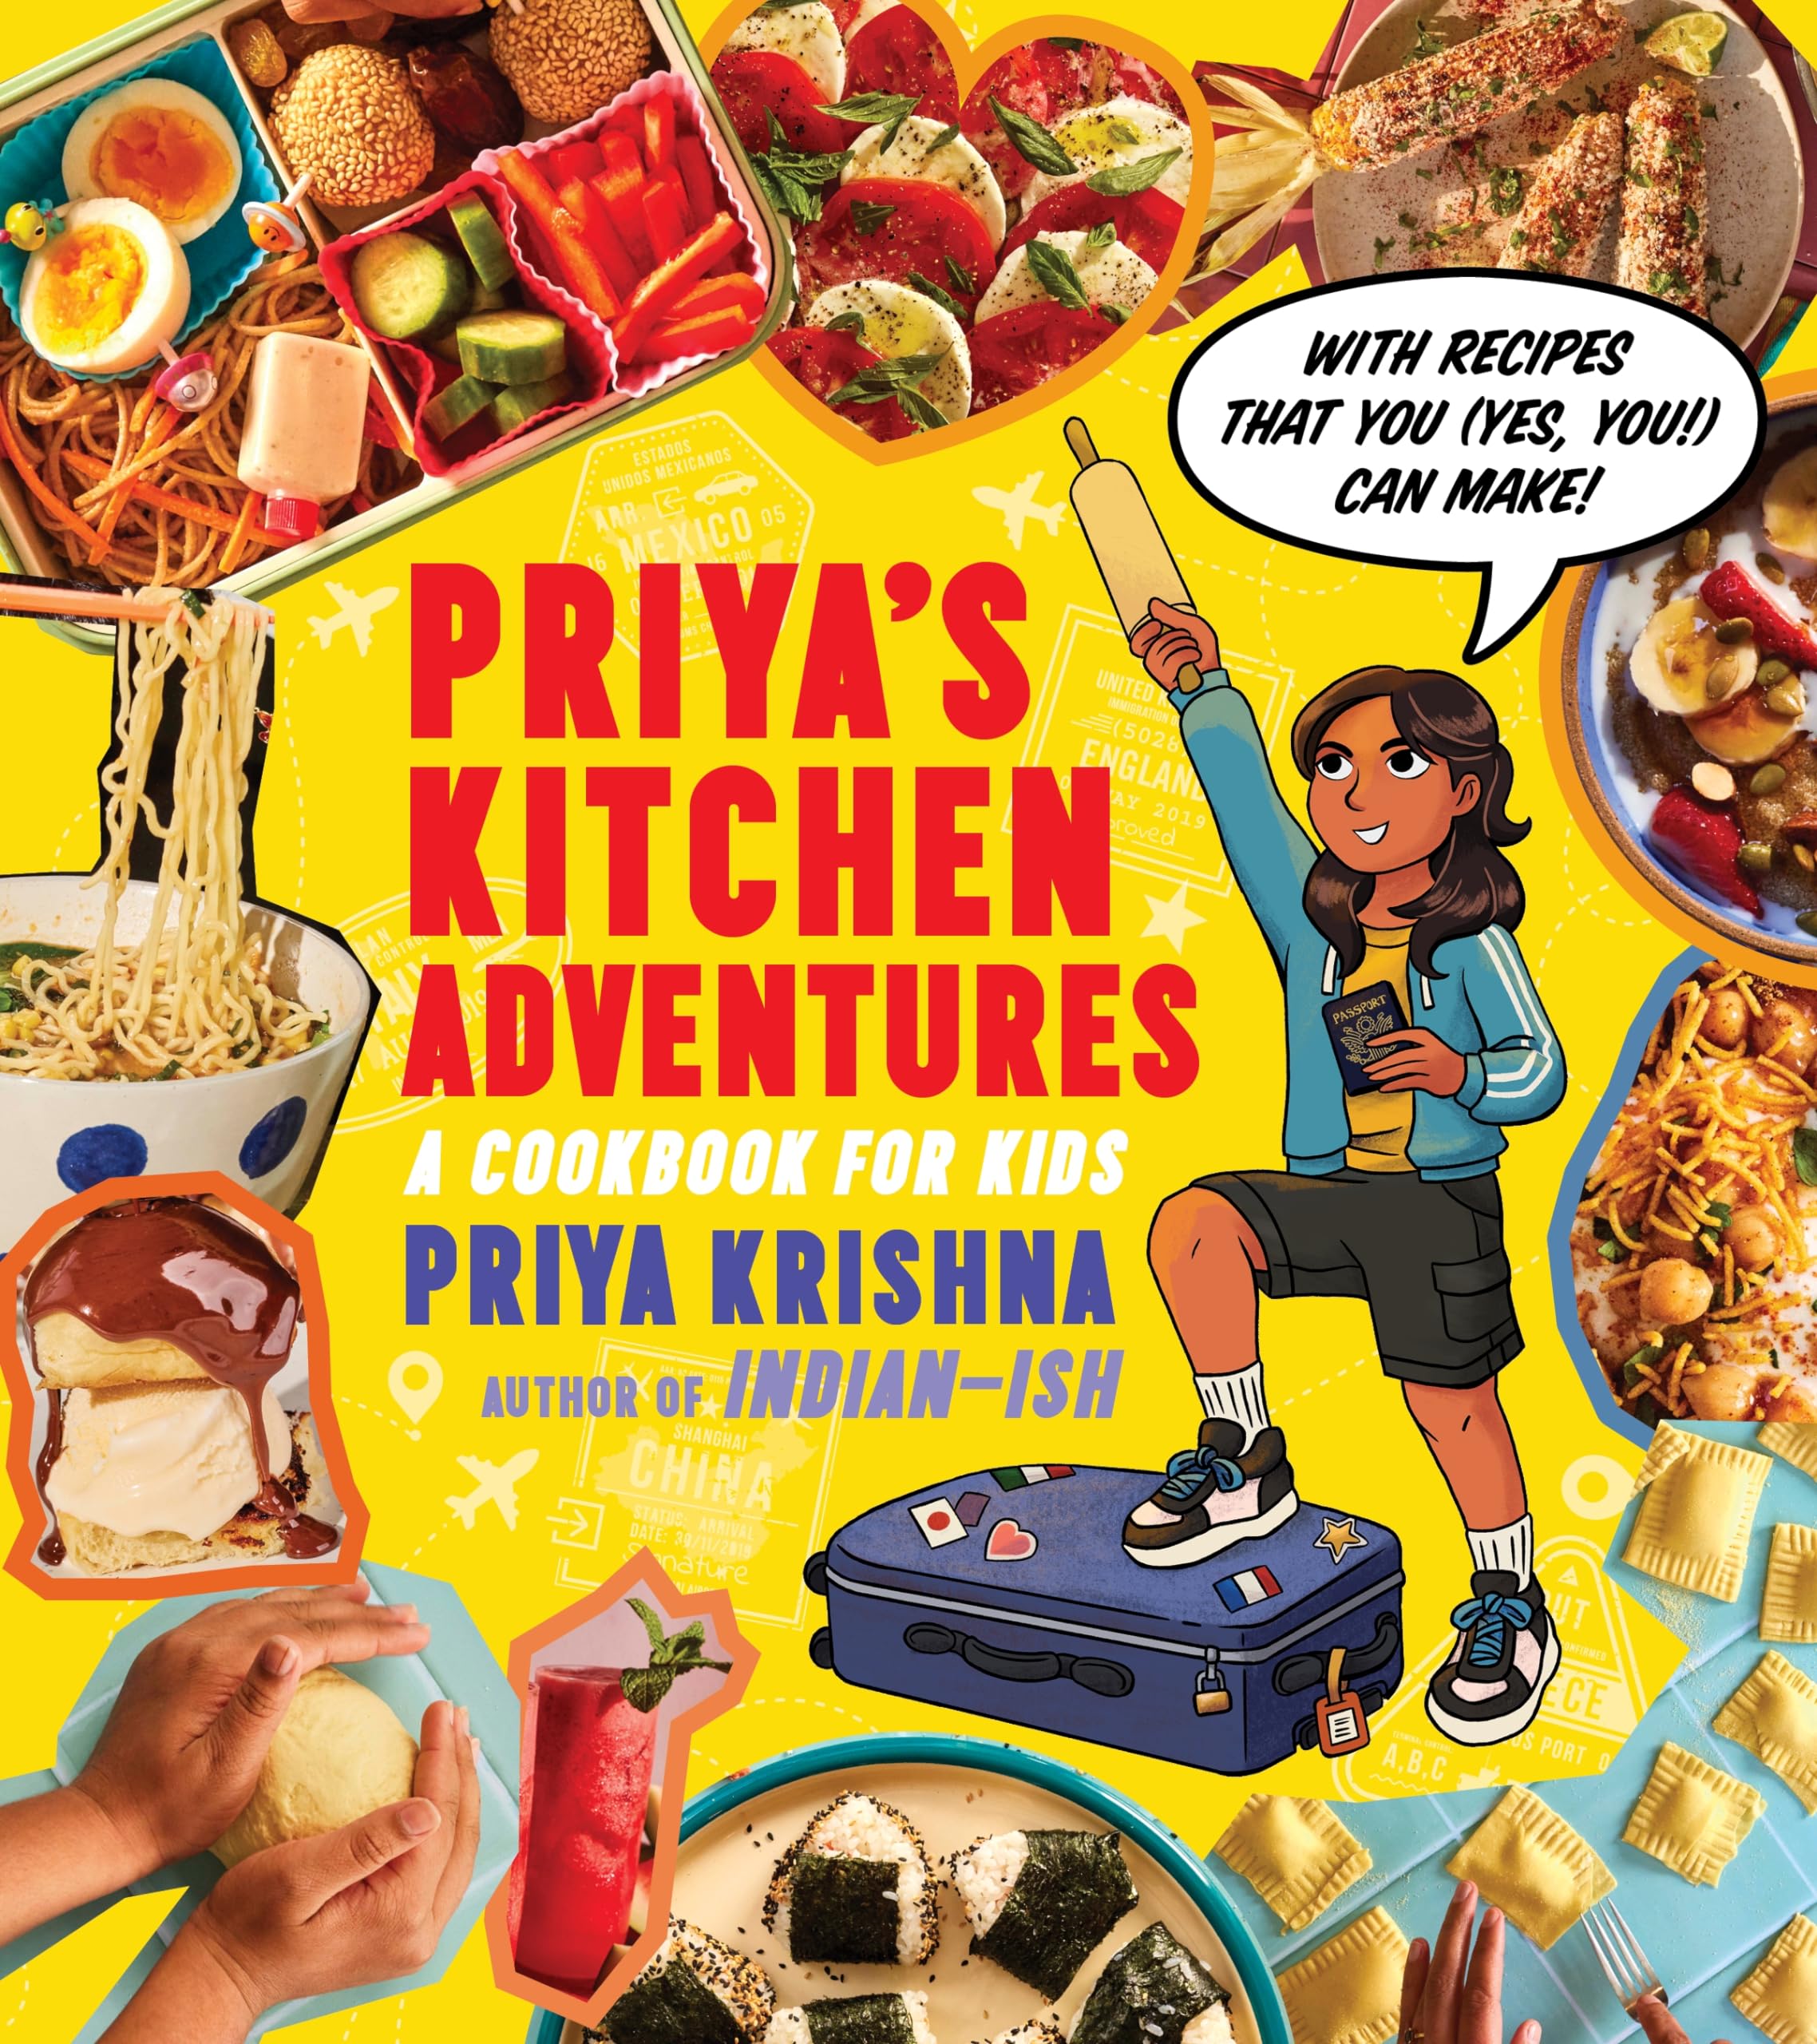 Priya's Kitchen Adventures: A Cookbook for Kids by Krishna, Priya